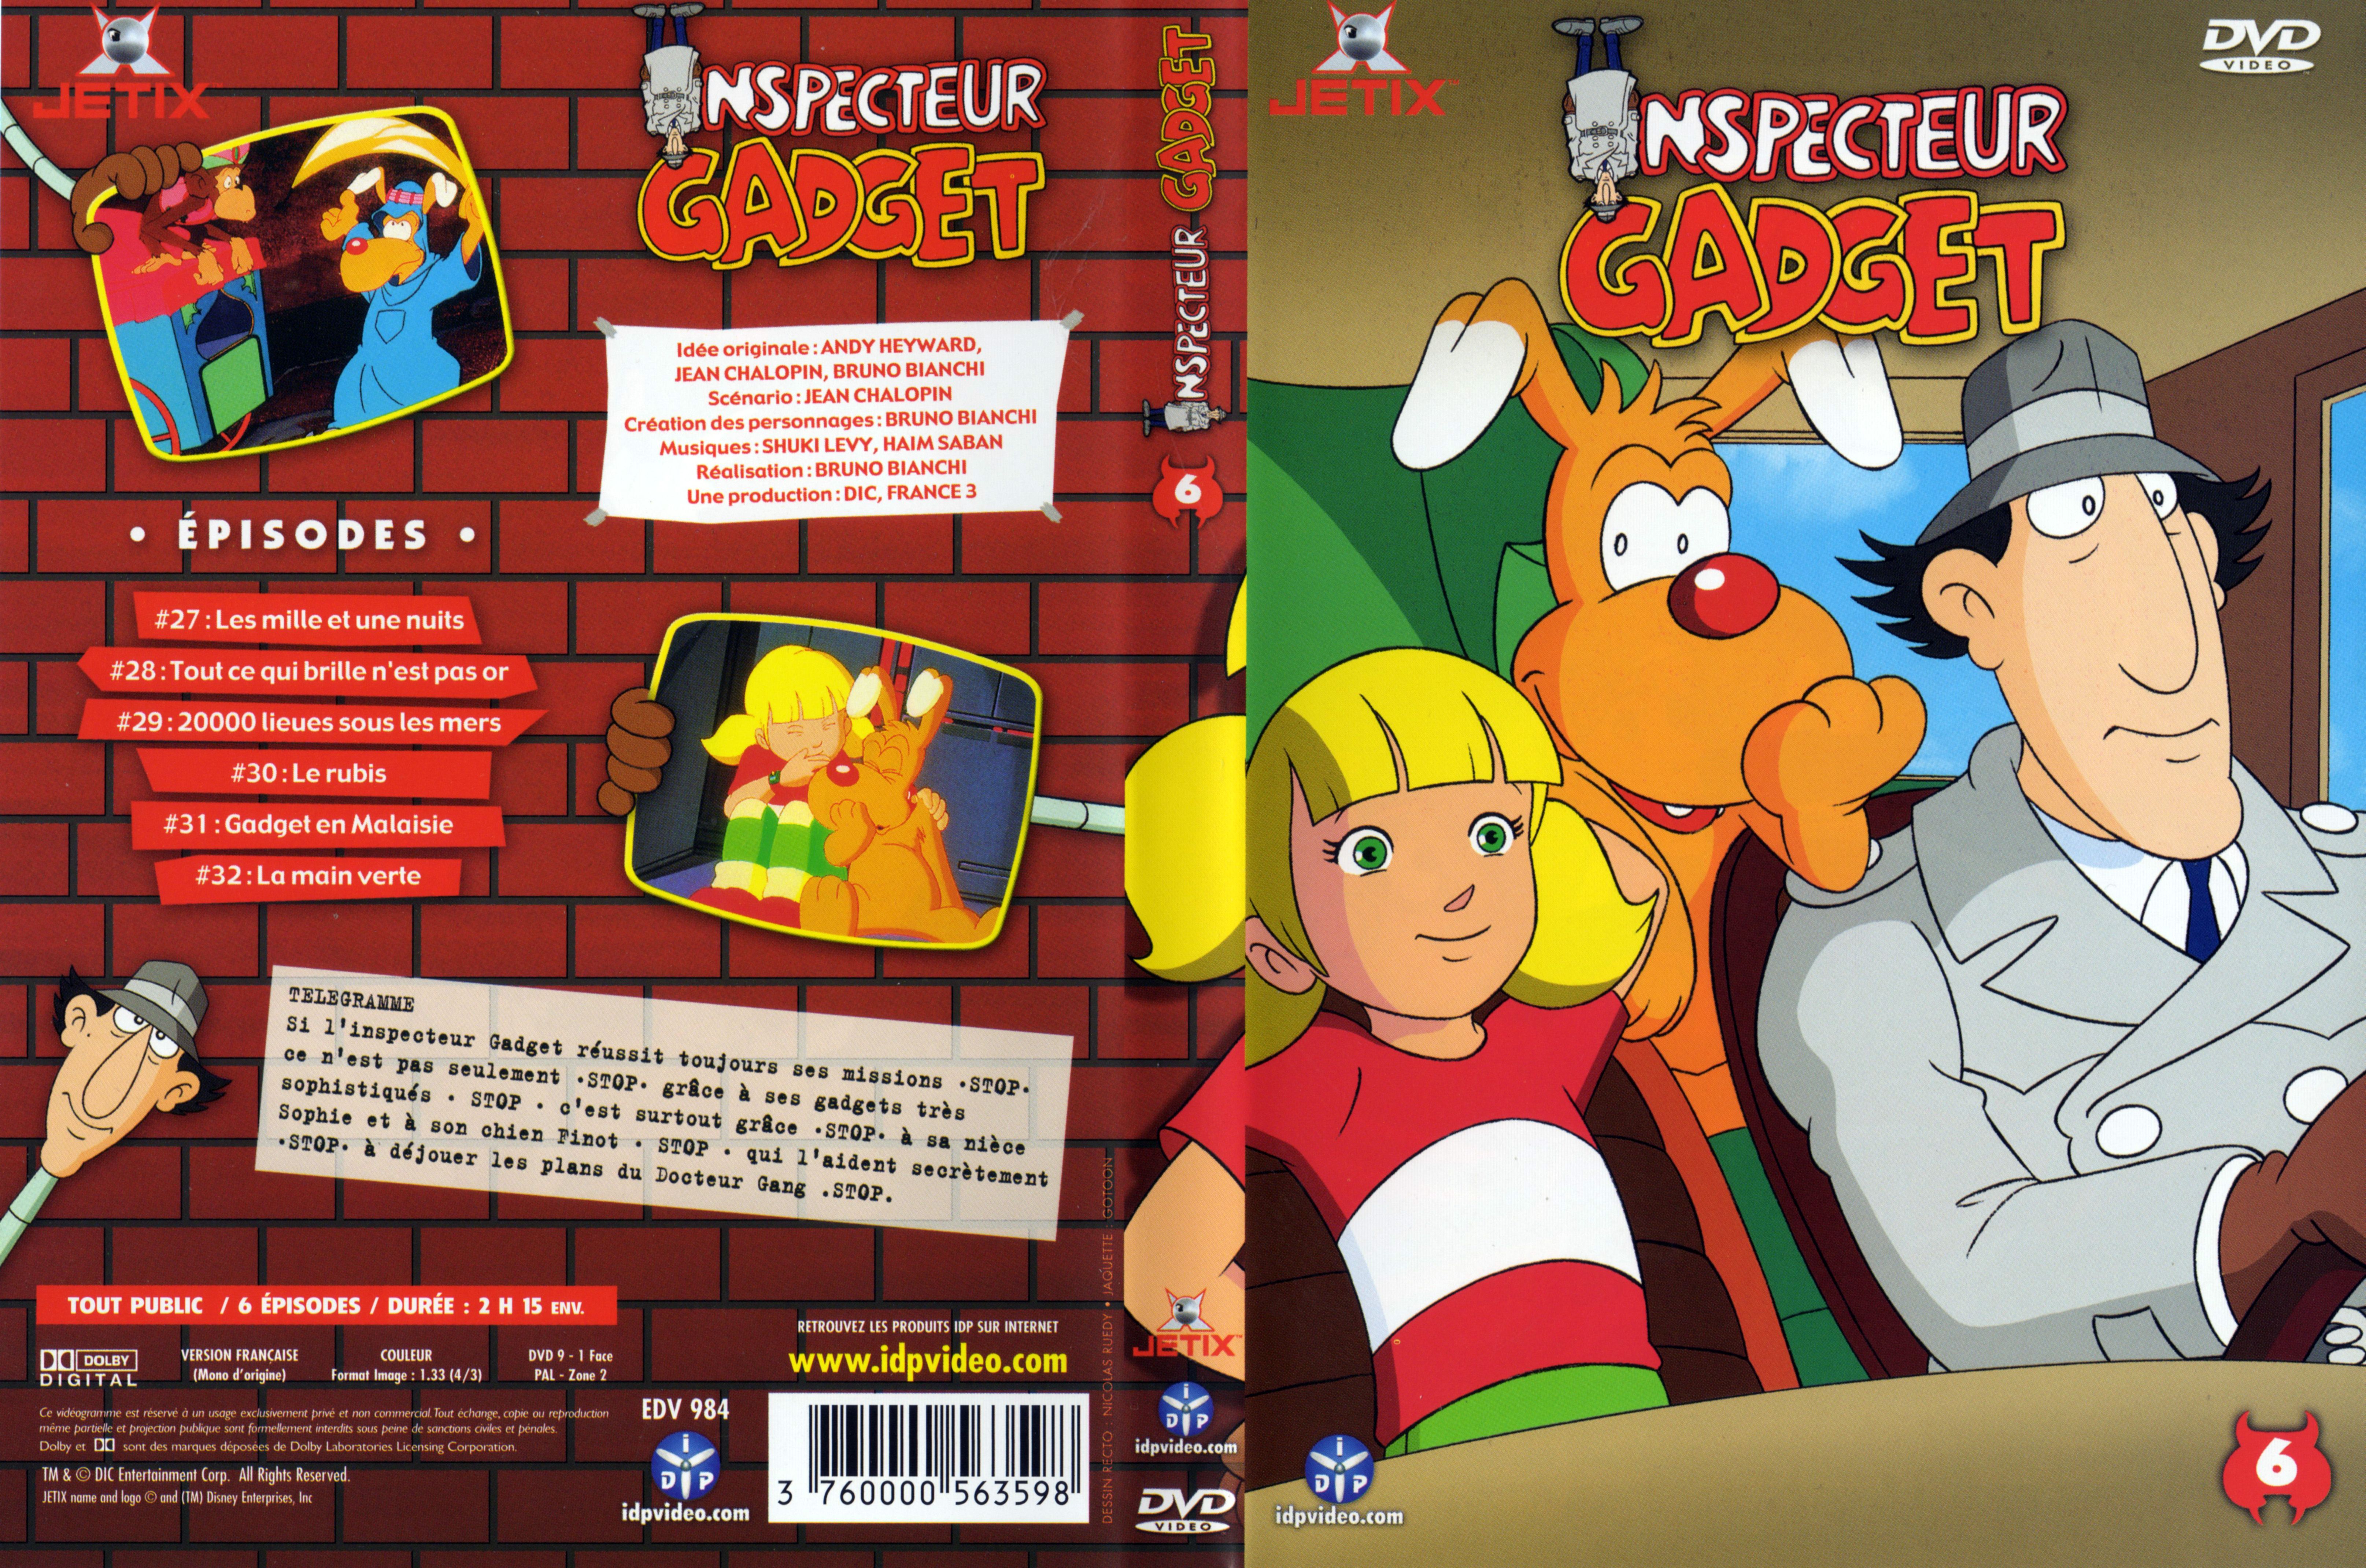 Jaquette DVD Inspecteur Gadget vol 06